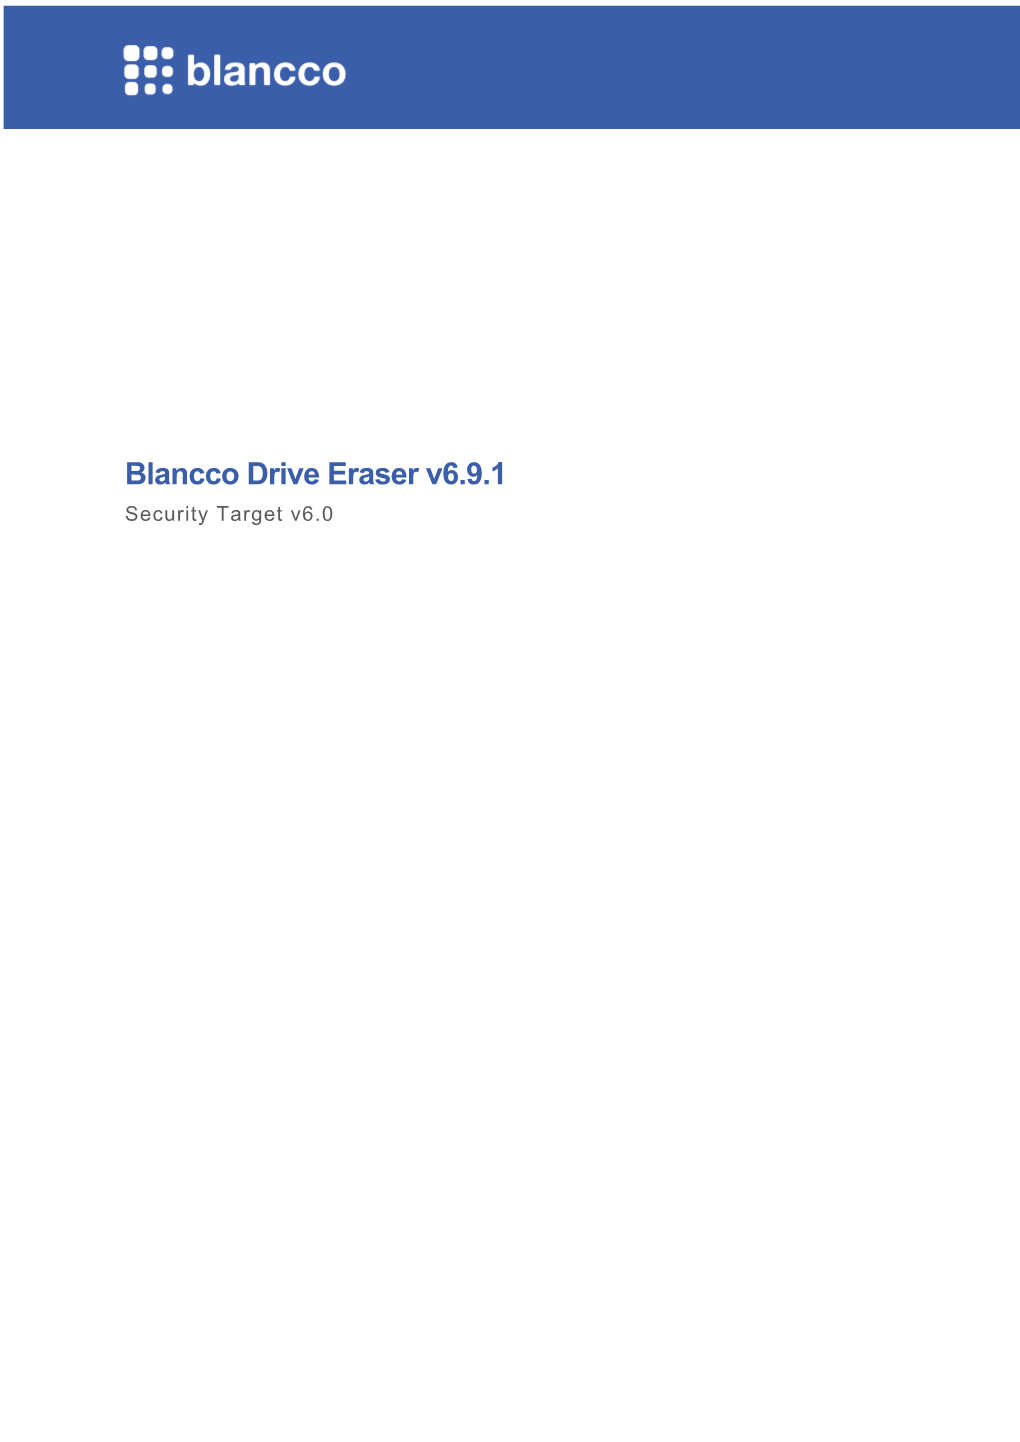 Blancco Drive Eraser V6.9.1 ST V6.0 Fixed